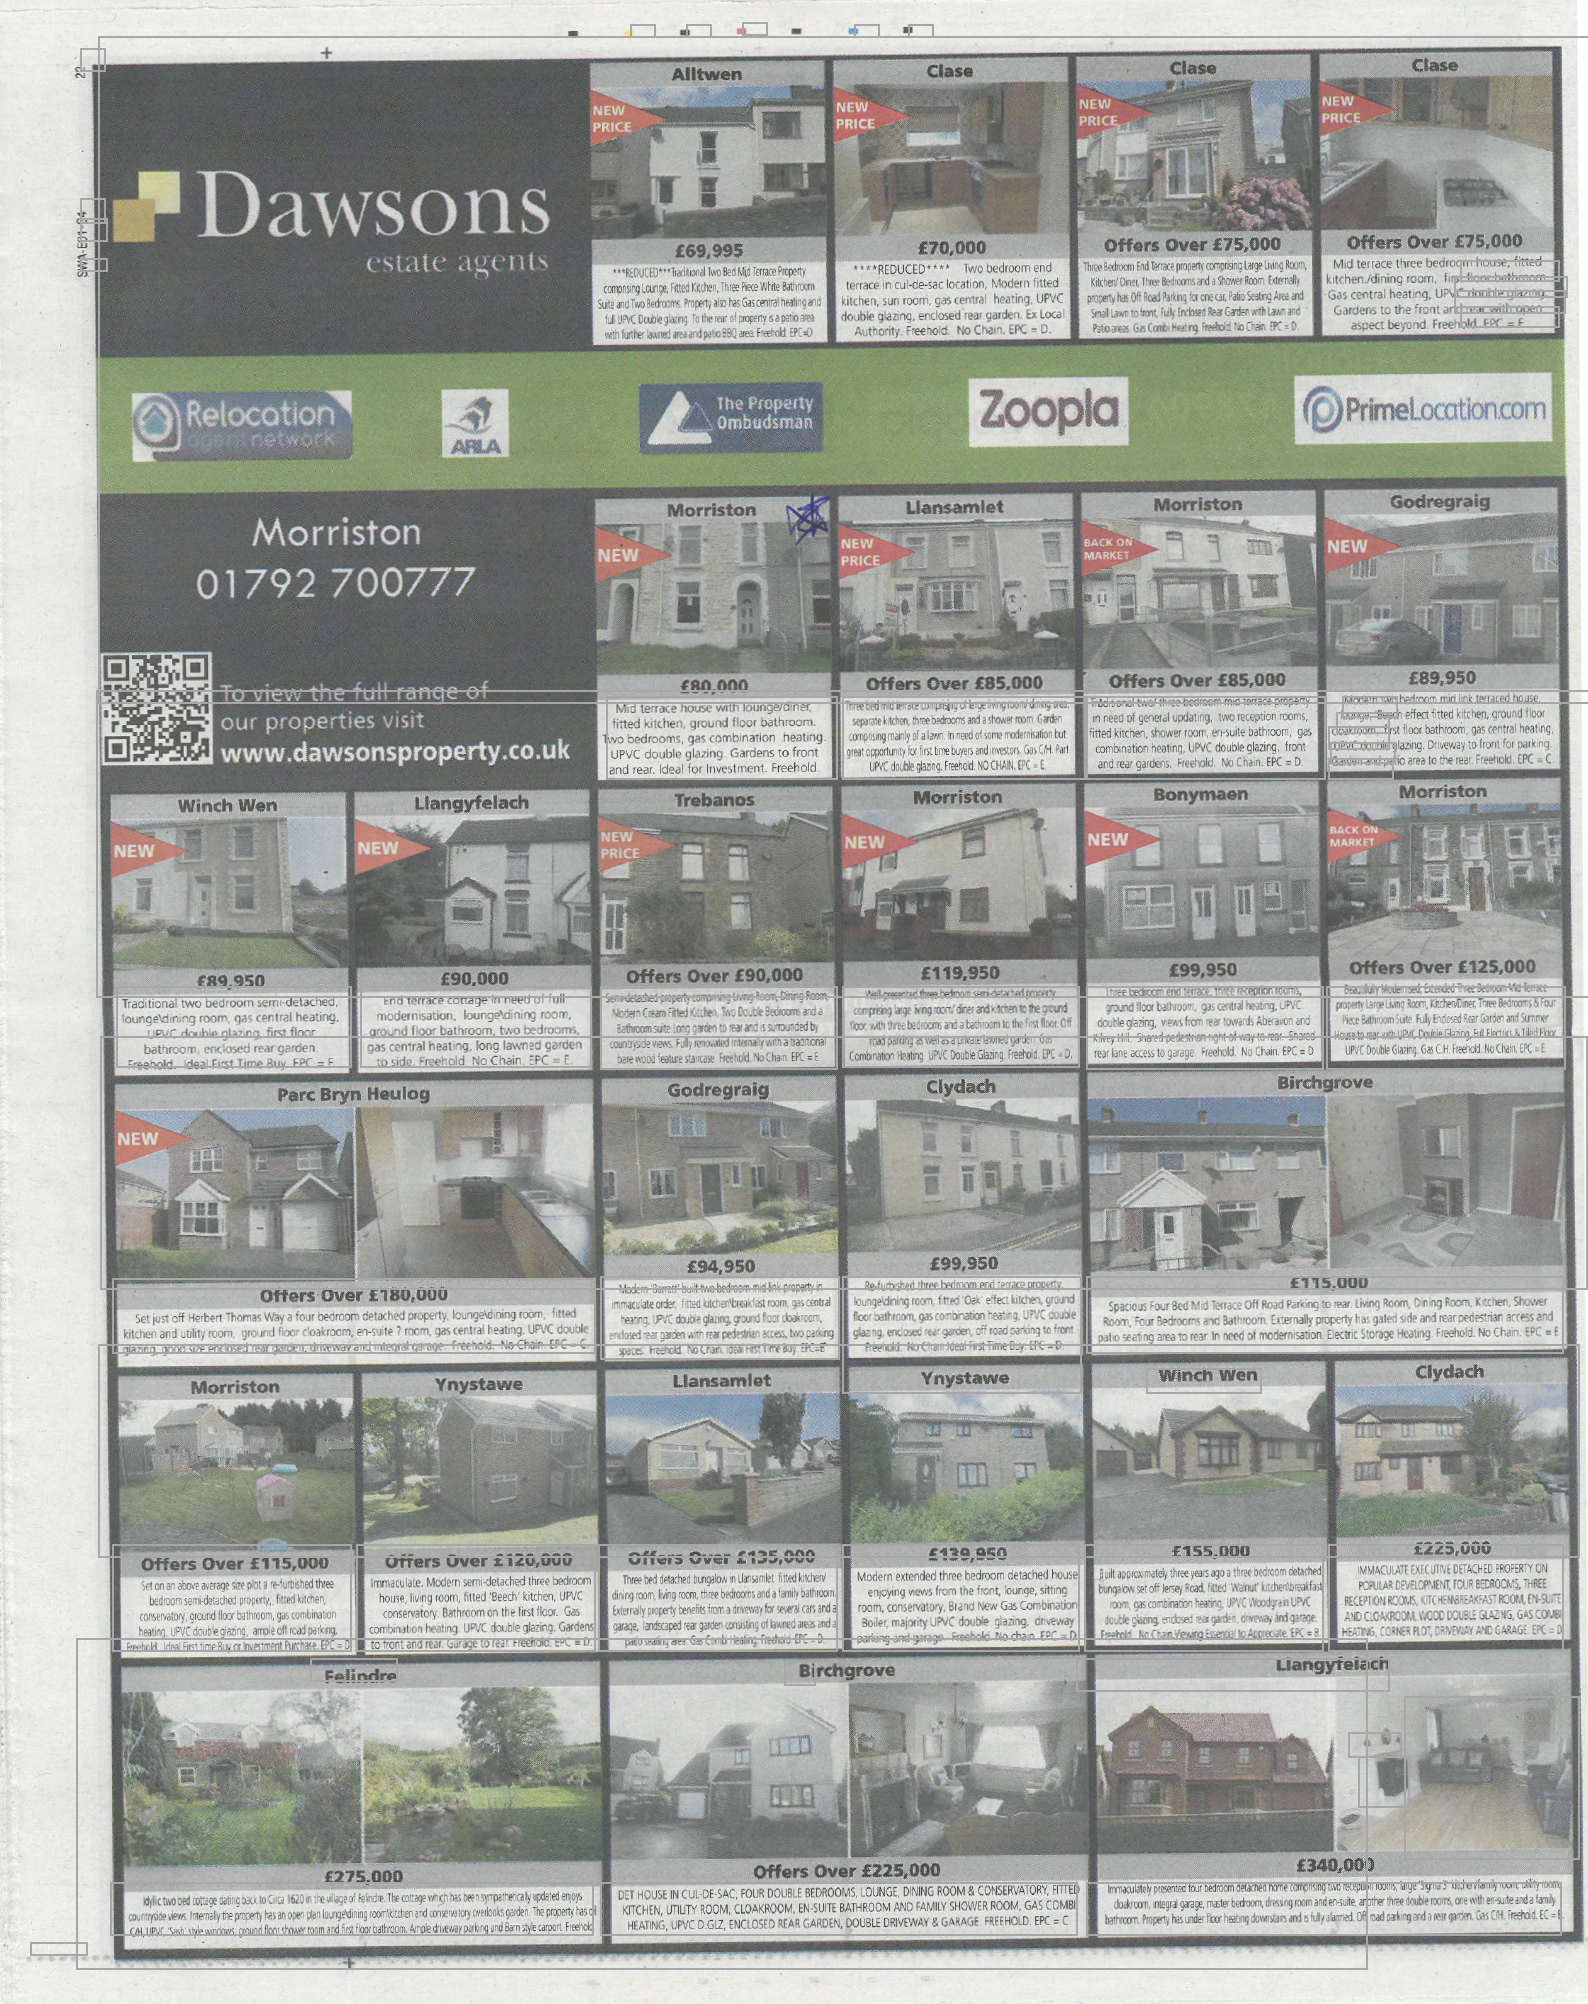 Dawsons newspaper advertising